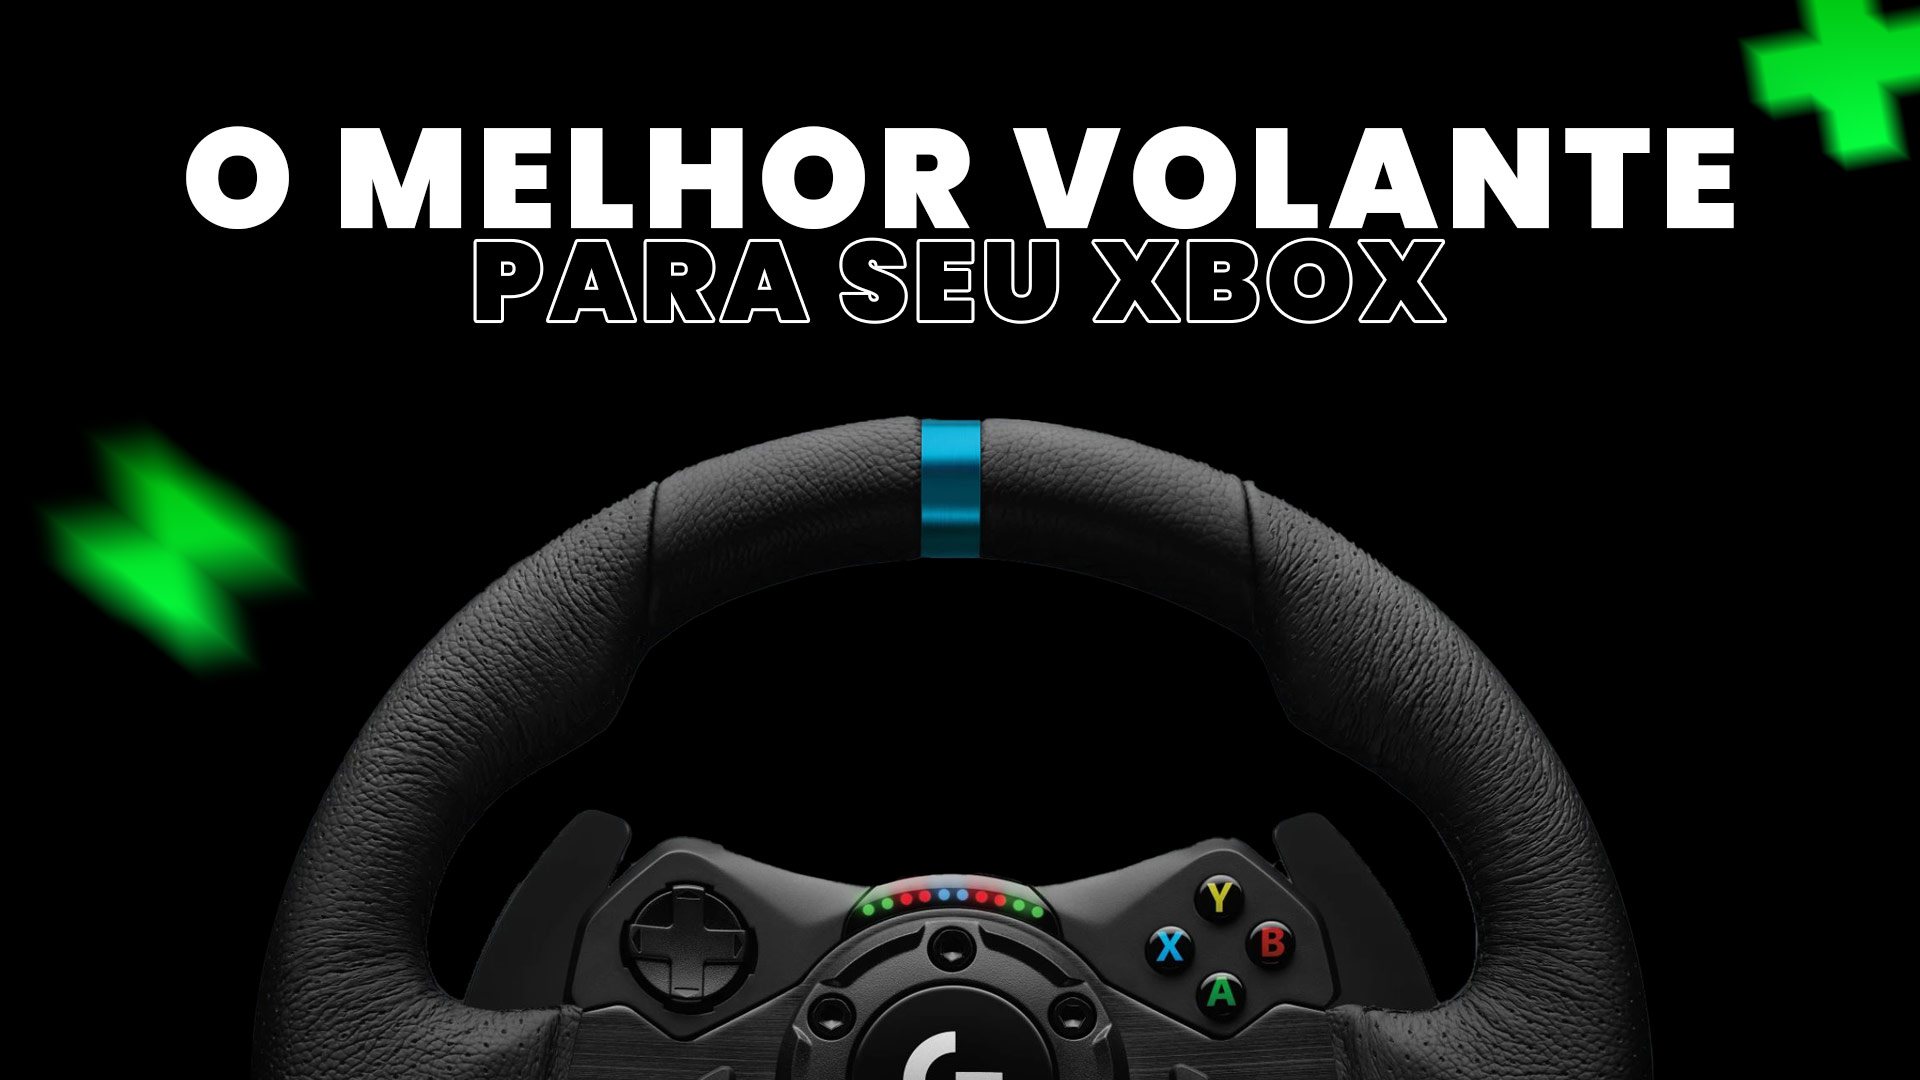 LOGITECH G923, El MEJOR VOLANTE para Forza Horizon 5 (SERIES X / PC)